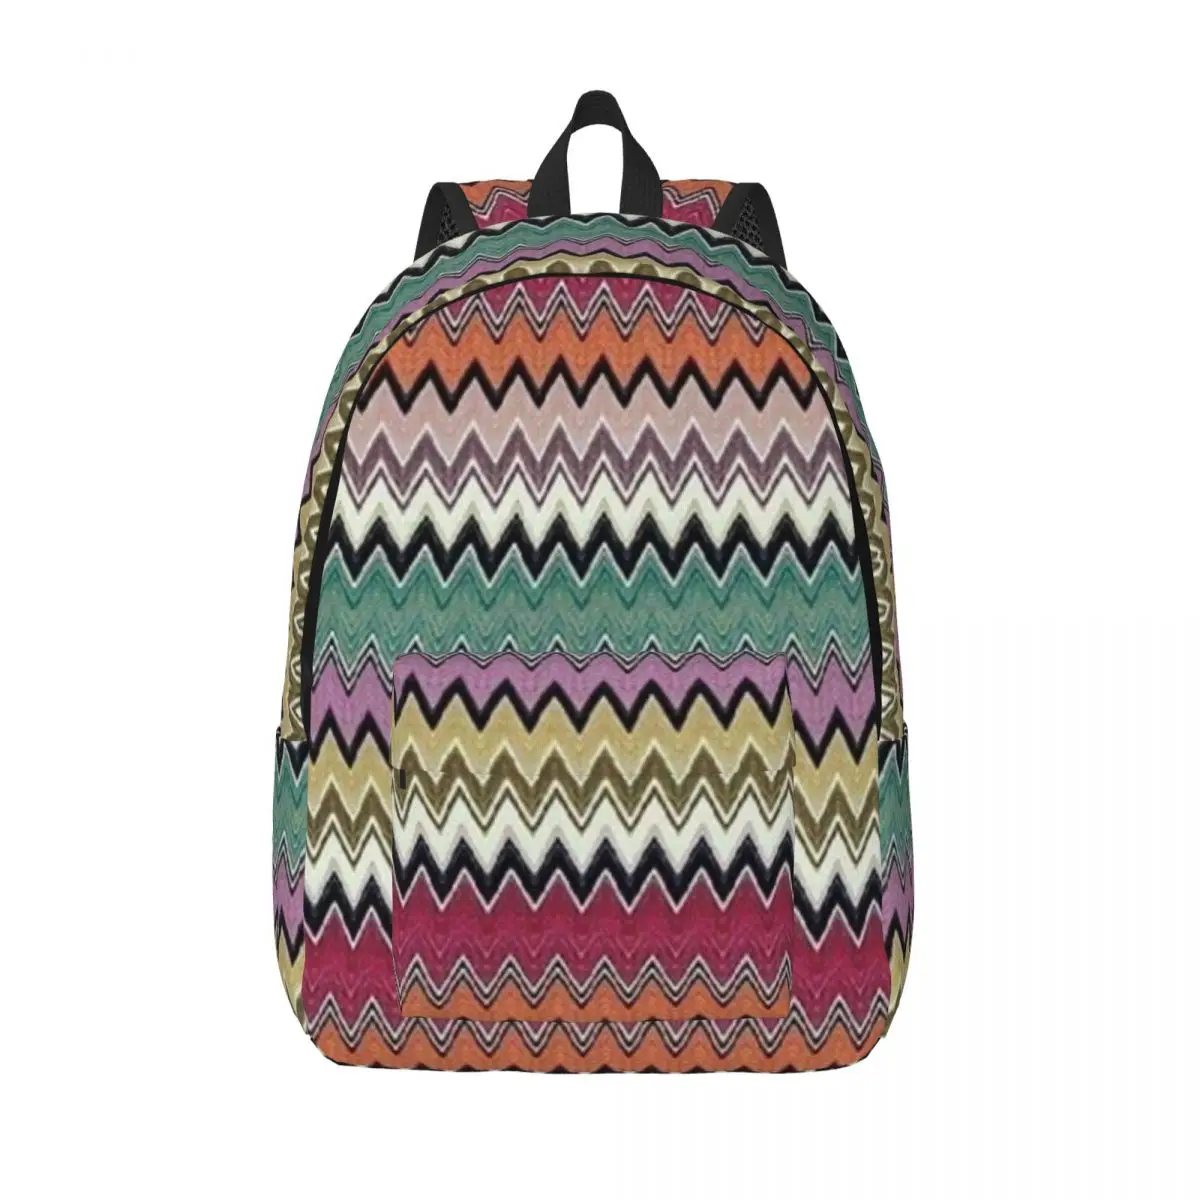 

Colorful Zig Zag Chevron Canvas Backpacks for Girls Bohemian Geometric School College Travel Bags Bookbag Fits 15 Inch Laptop